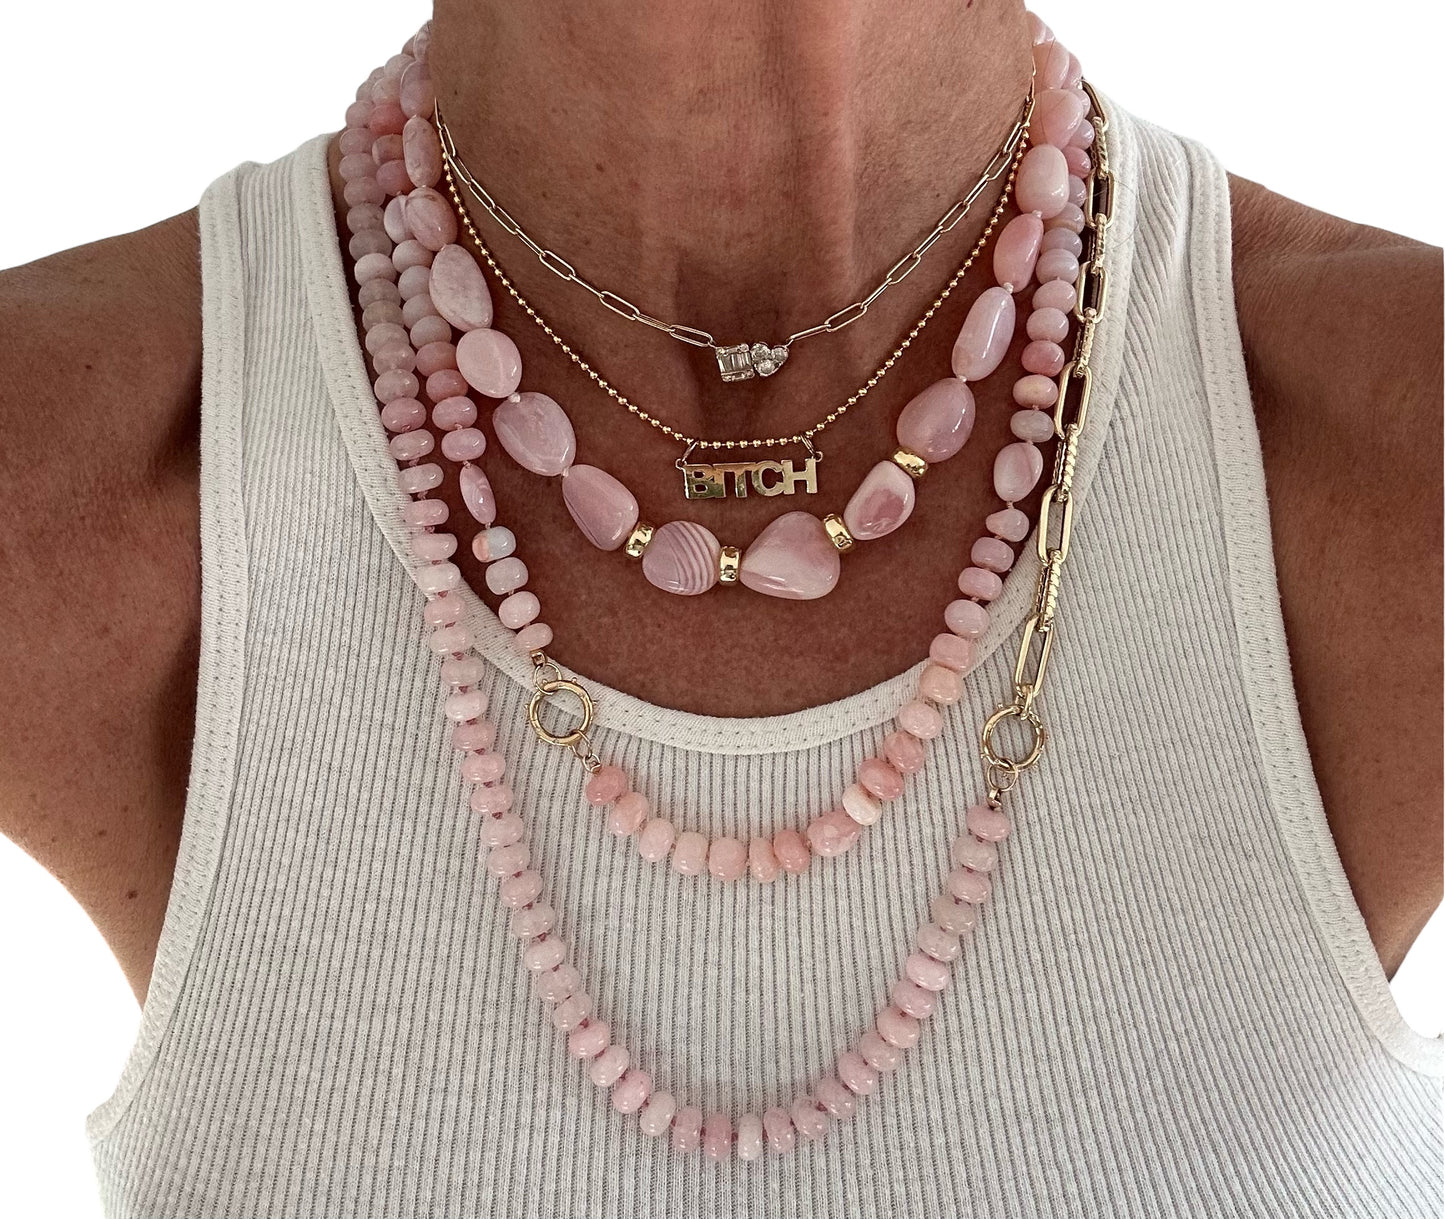 Pink Jade Gemstone Necklace